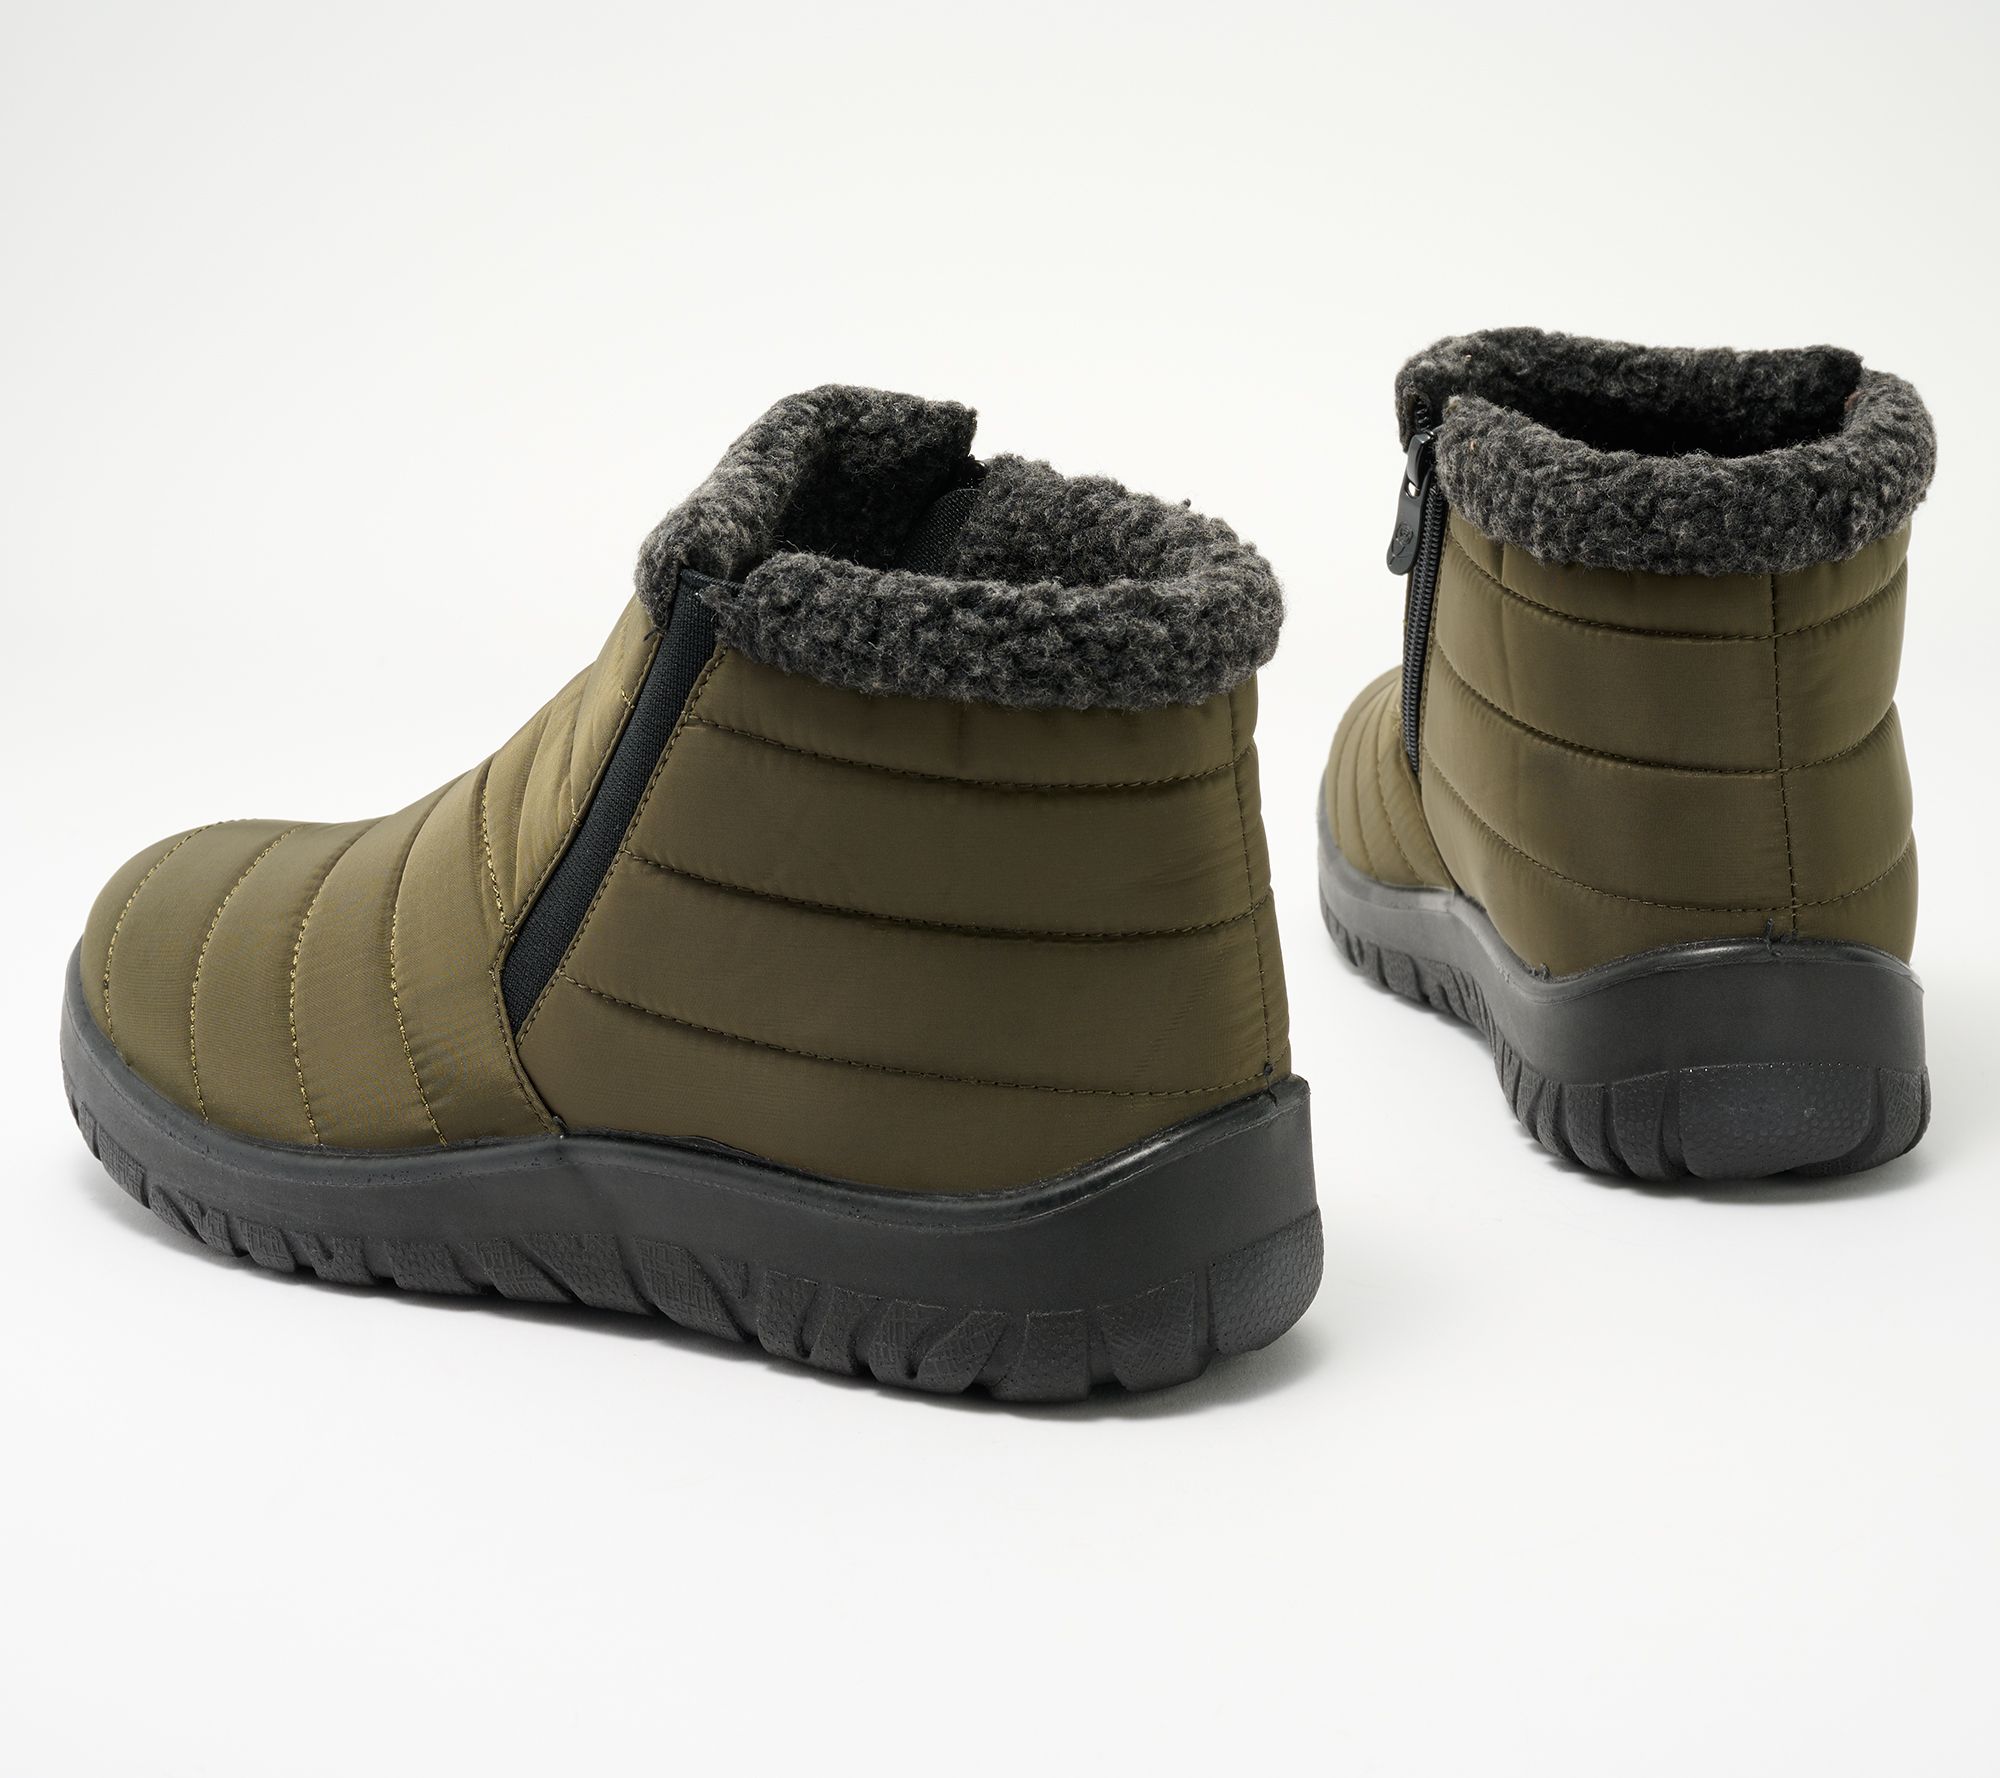 Flexus by Spring Step Waterproof Winter Boots - Melba - QVC.com